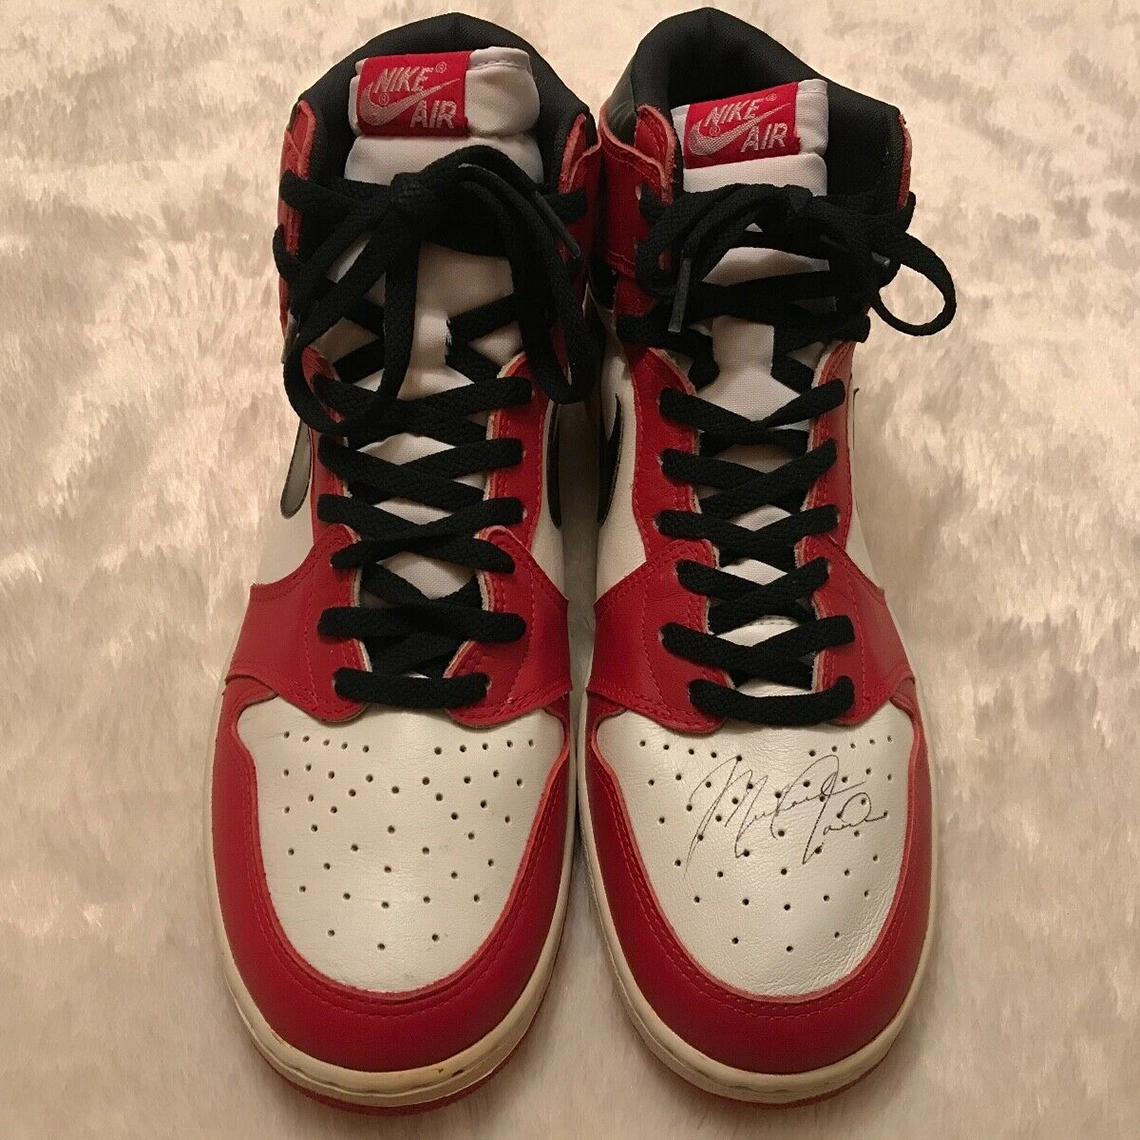 Air Jordan 1s Signed by Michael Jordan Listed on  for $1